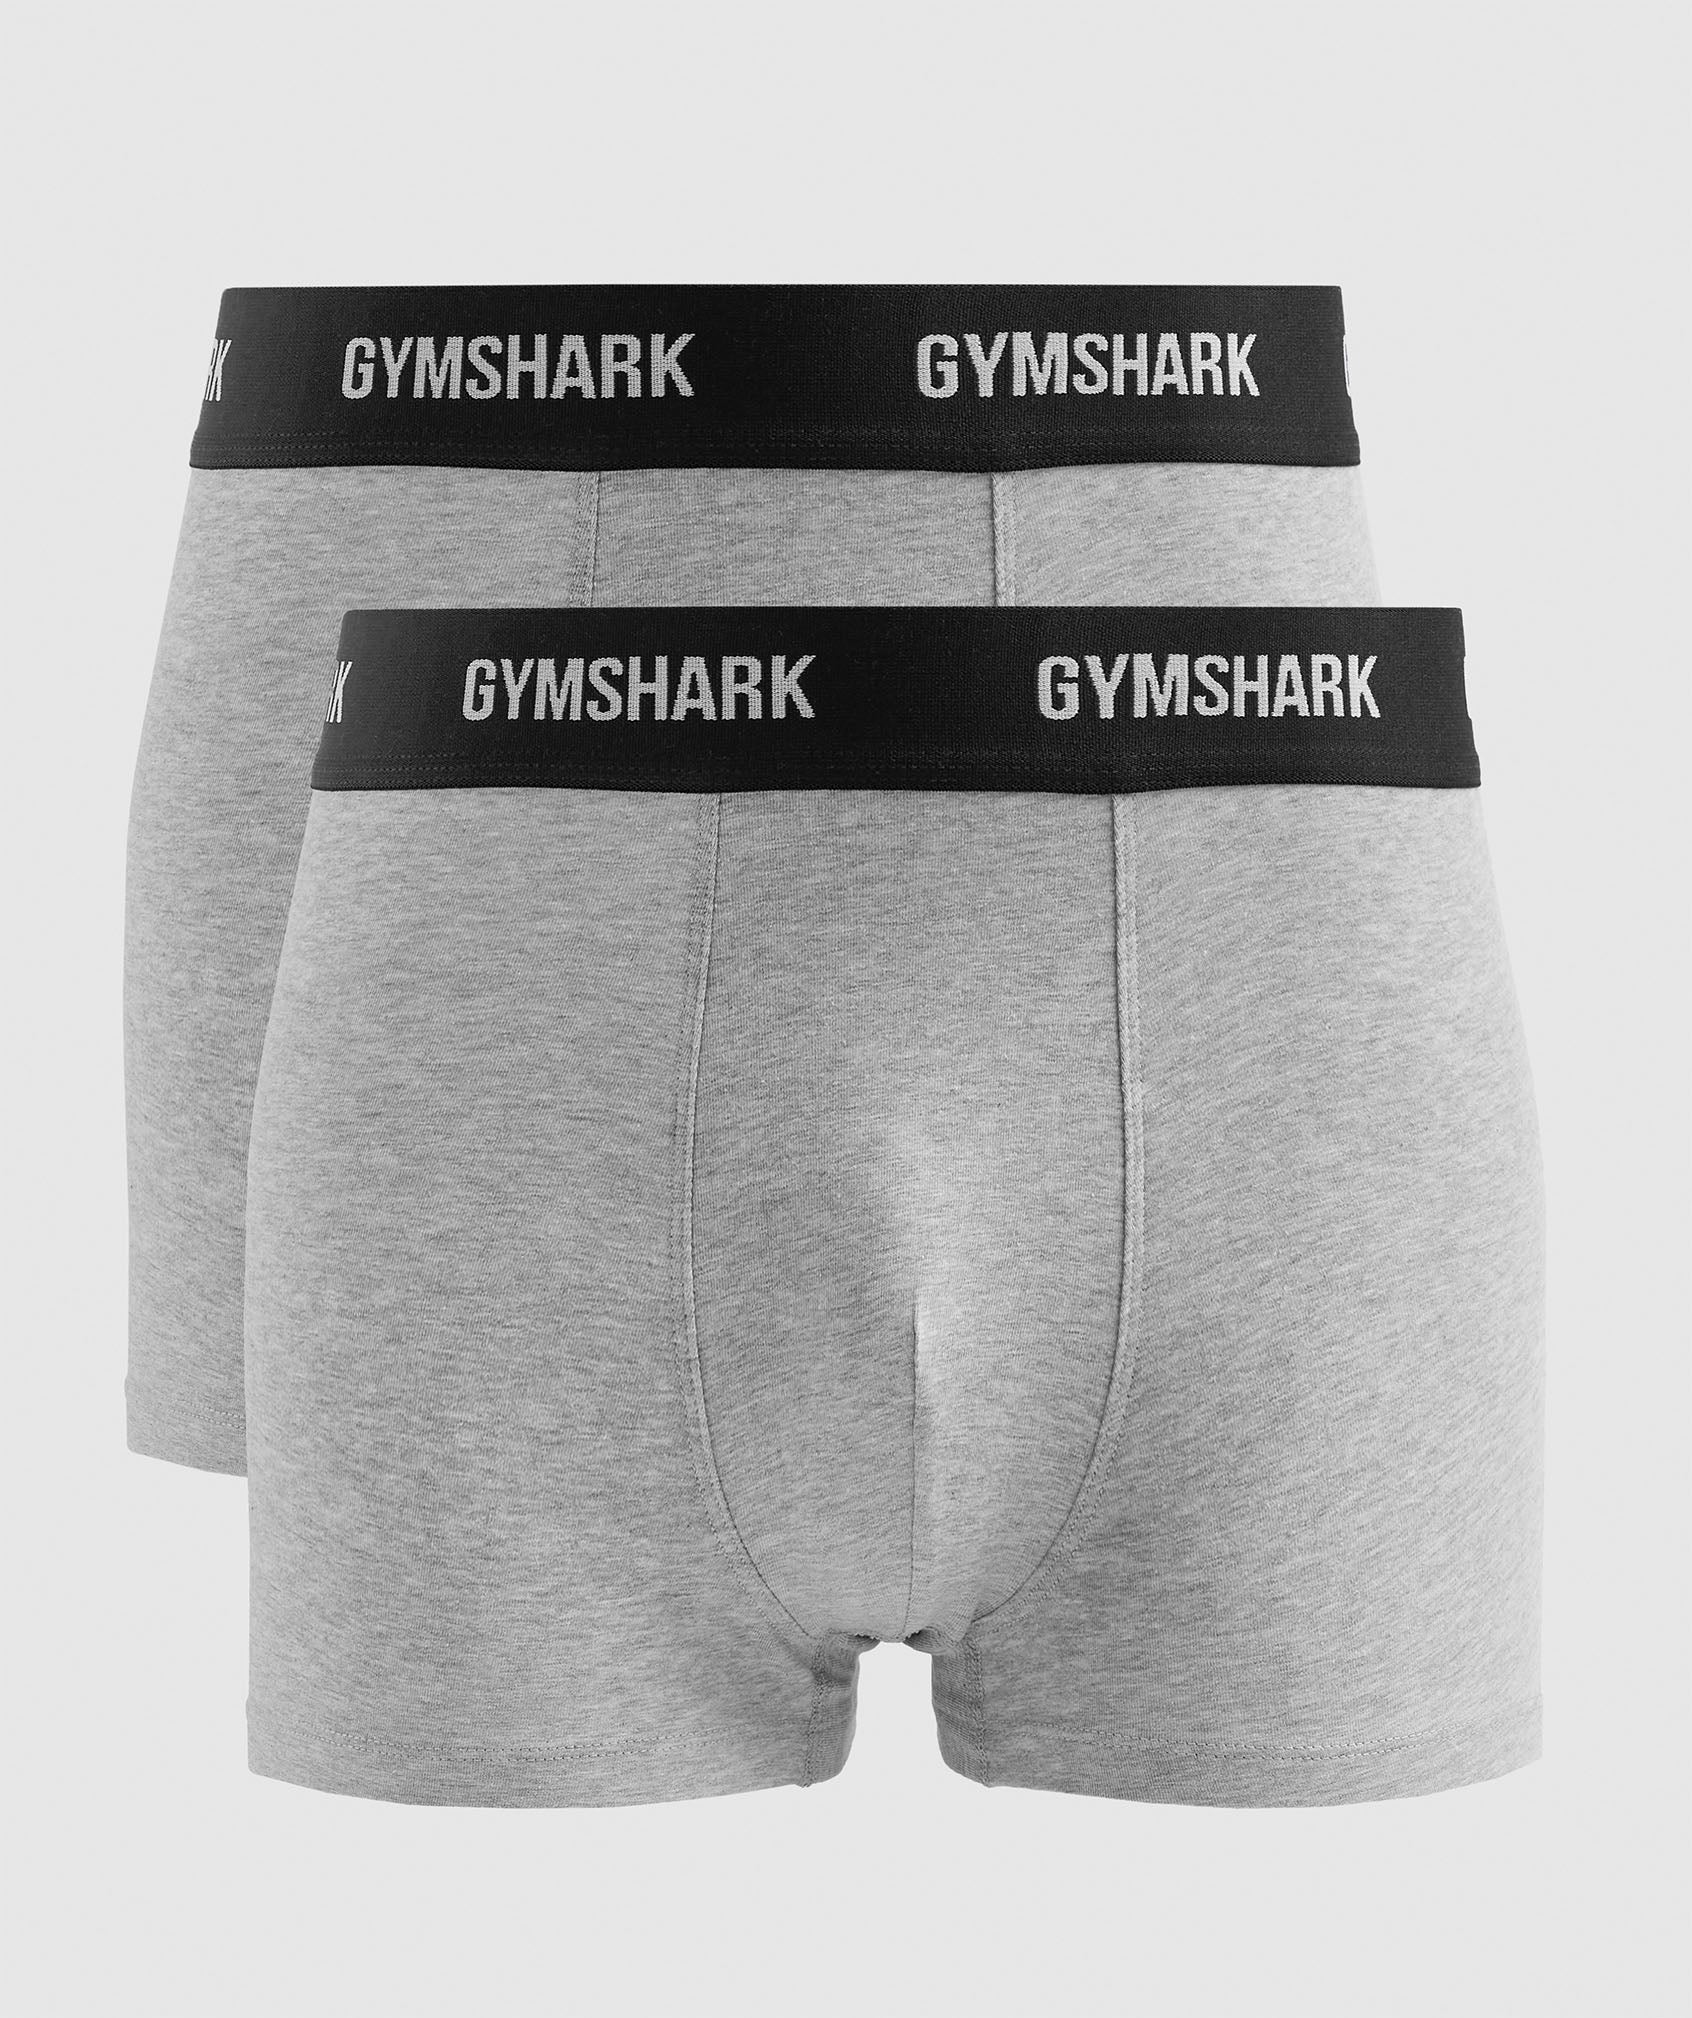 Gymshark Boxers 3 PK - White/Light Grey Core Marl/Black